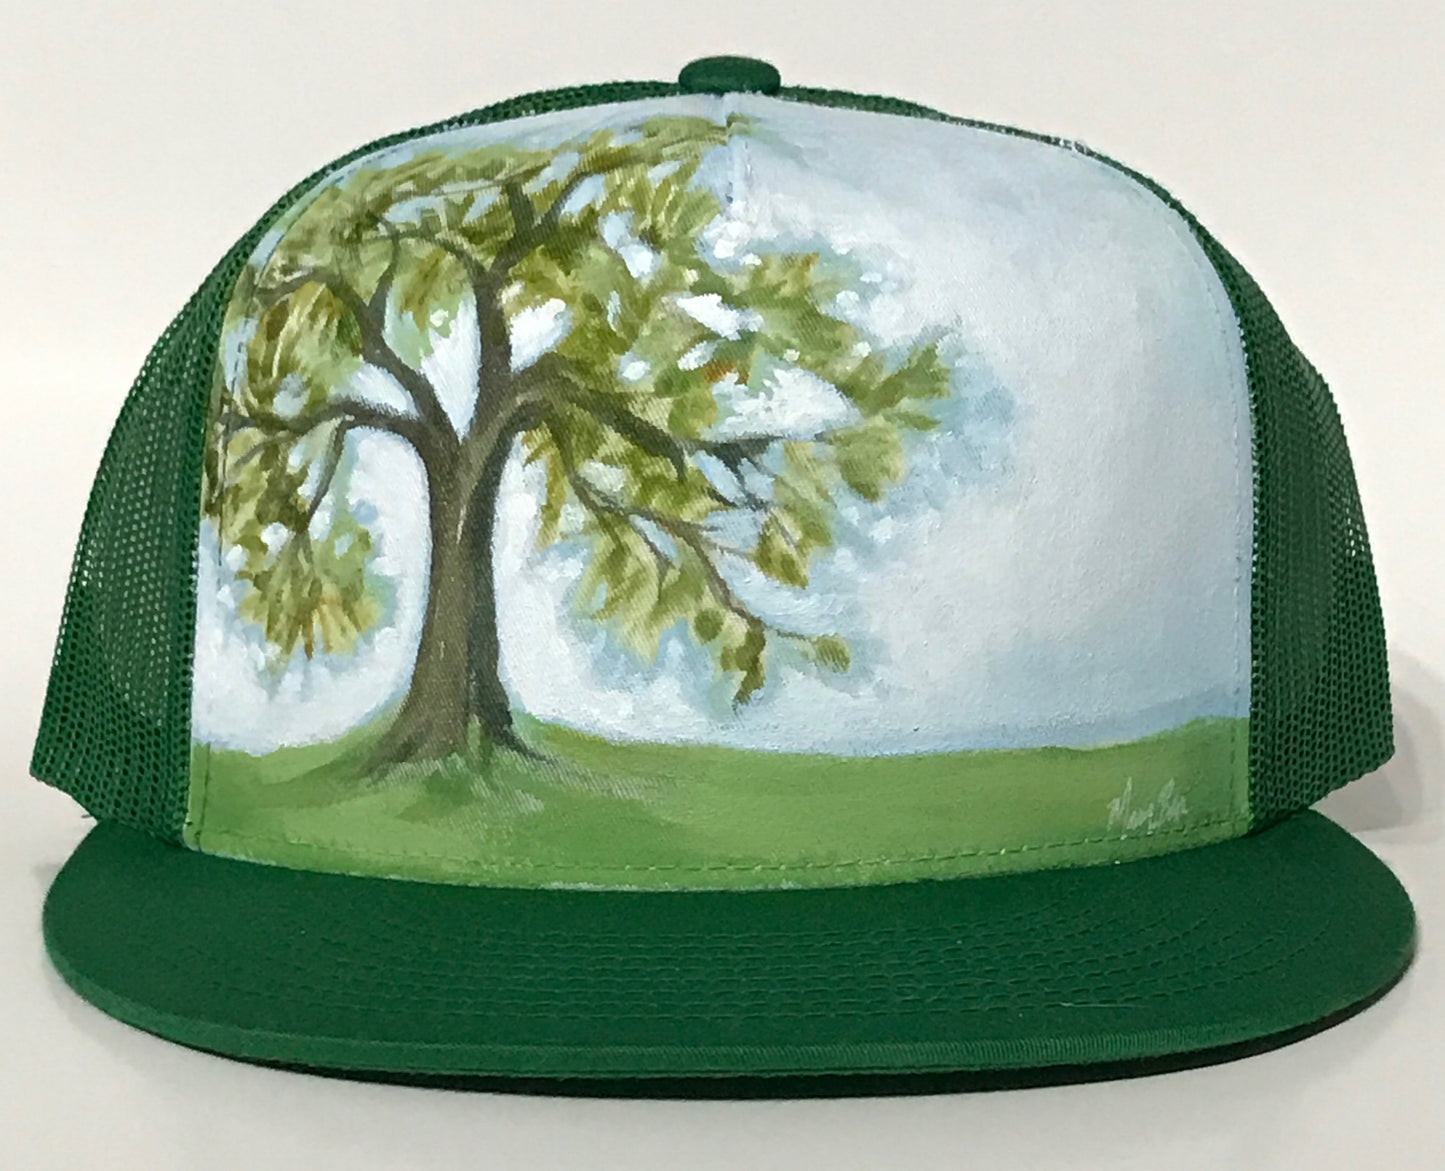 "Tree" Hand Painted on Green Snapback Trucker Hat